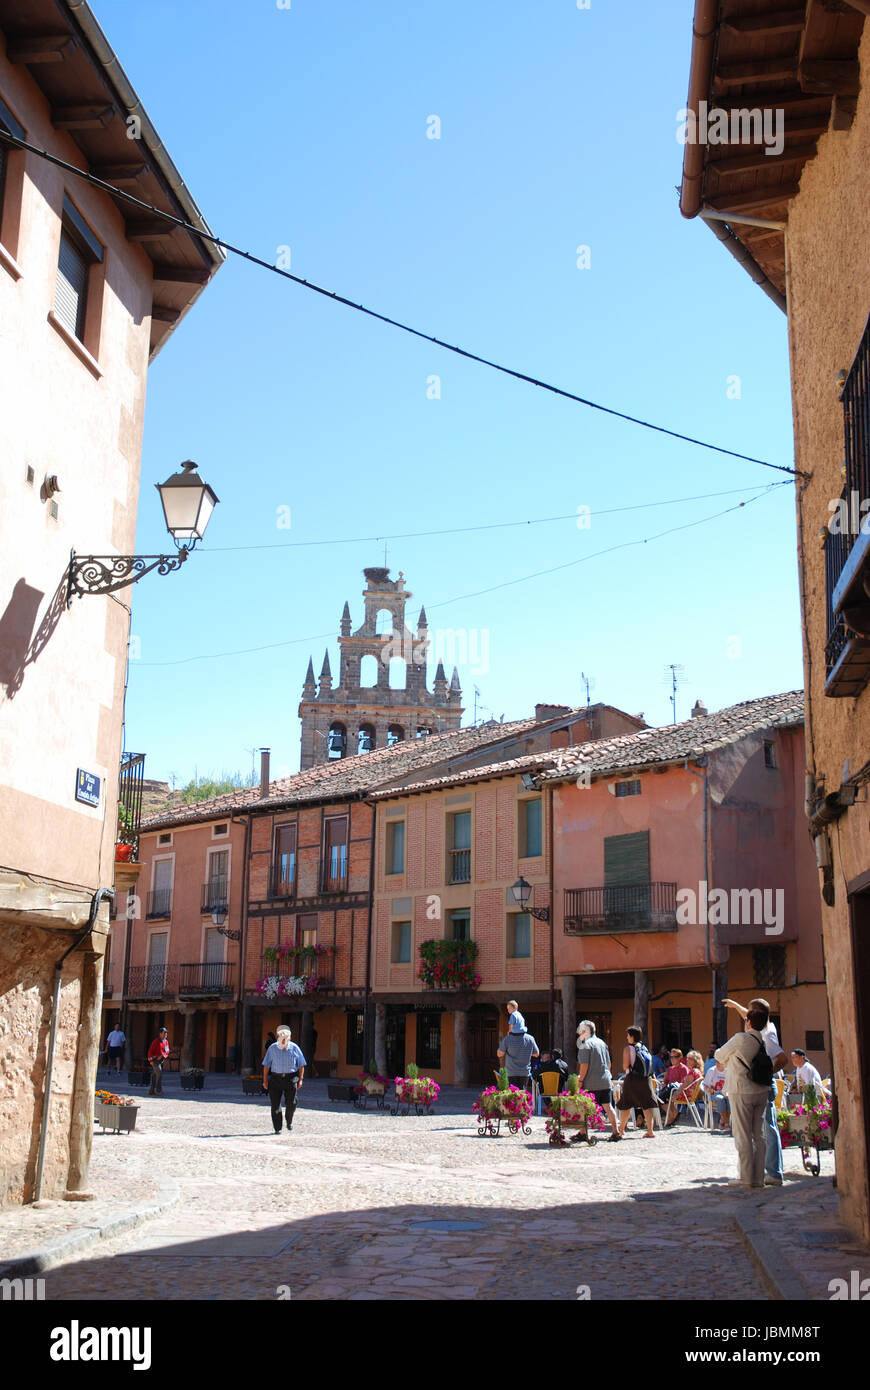 Plaza Mayor. Ayllon, Segovia province, Castilla Leon, Spain. Stock Photo